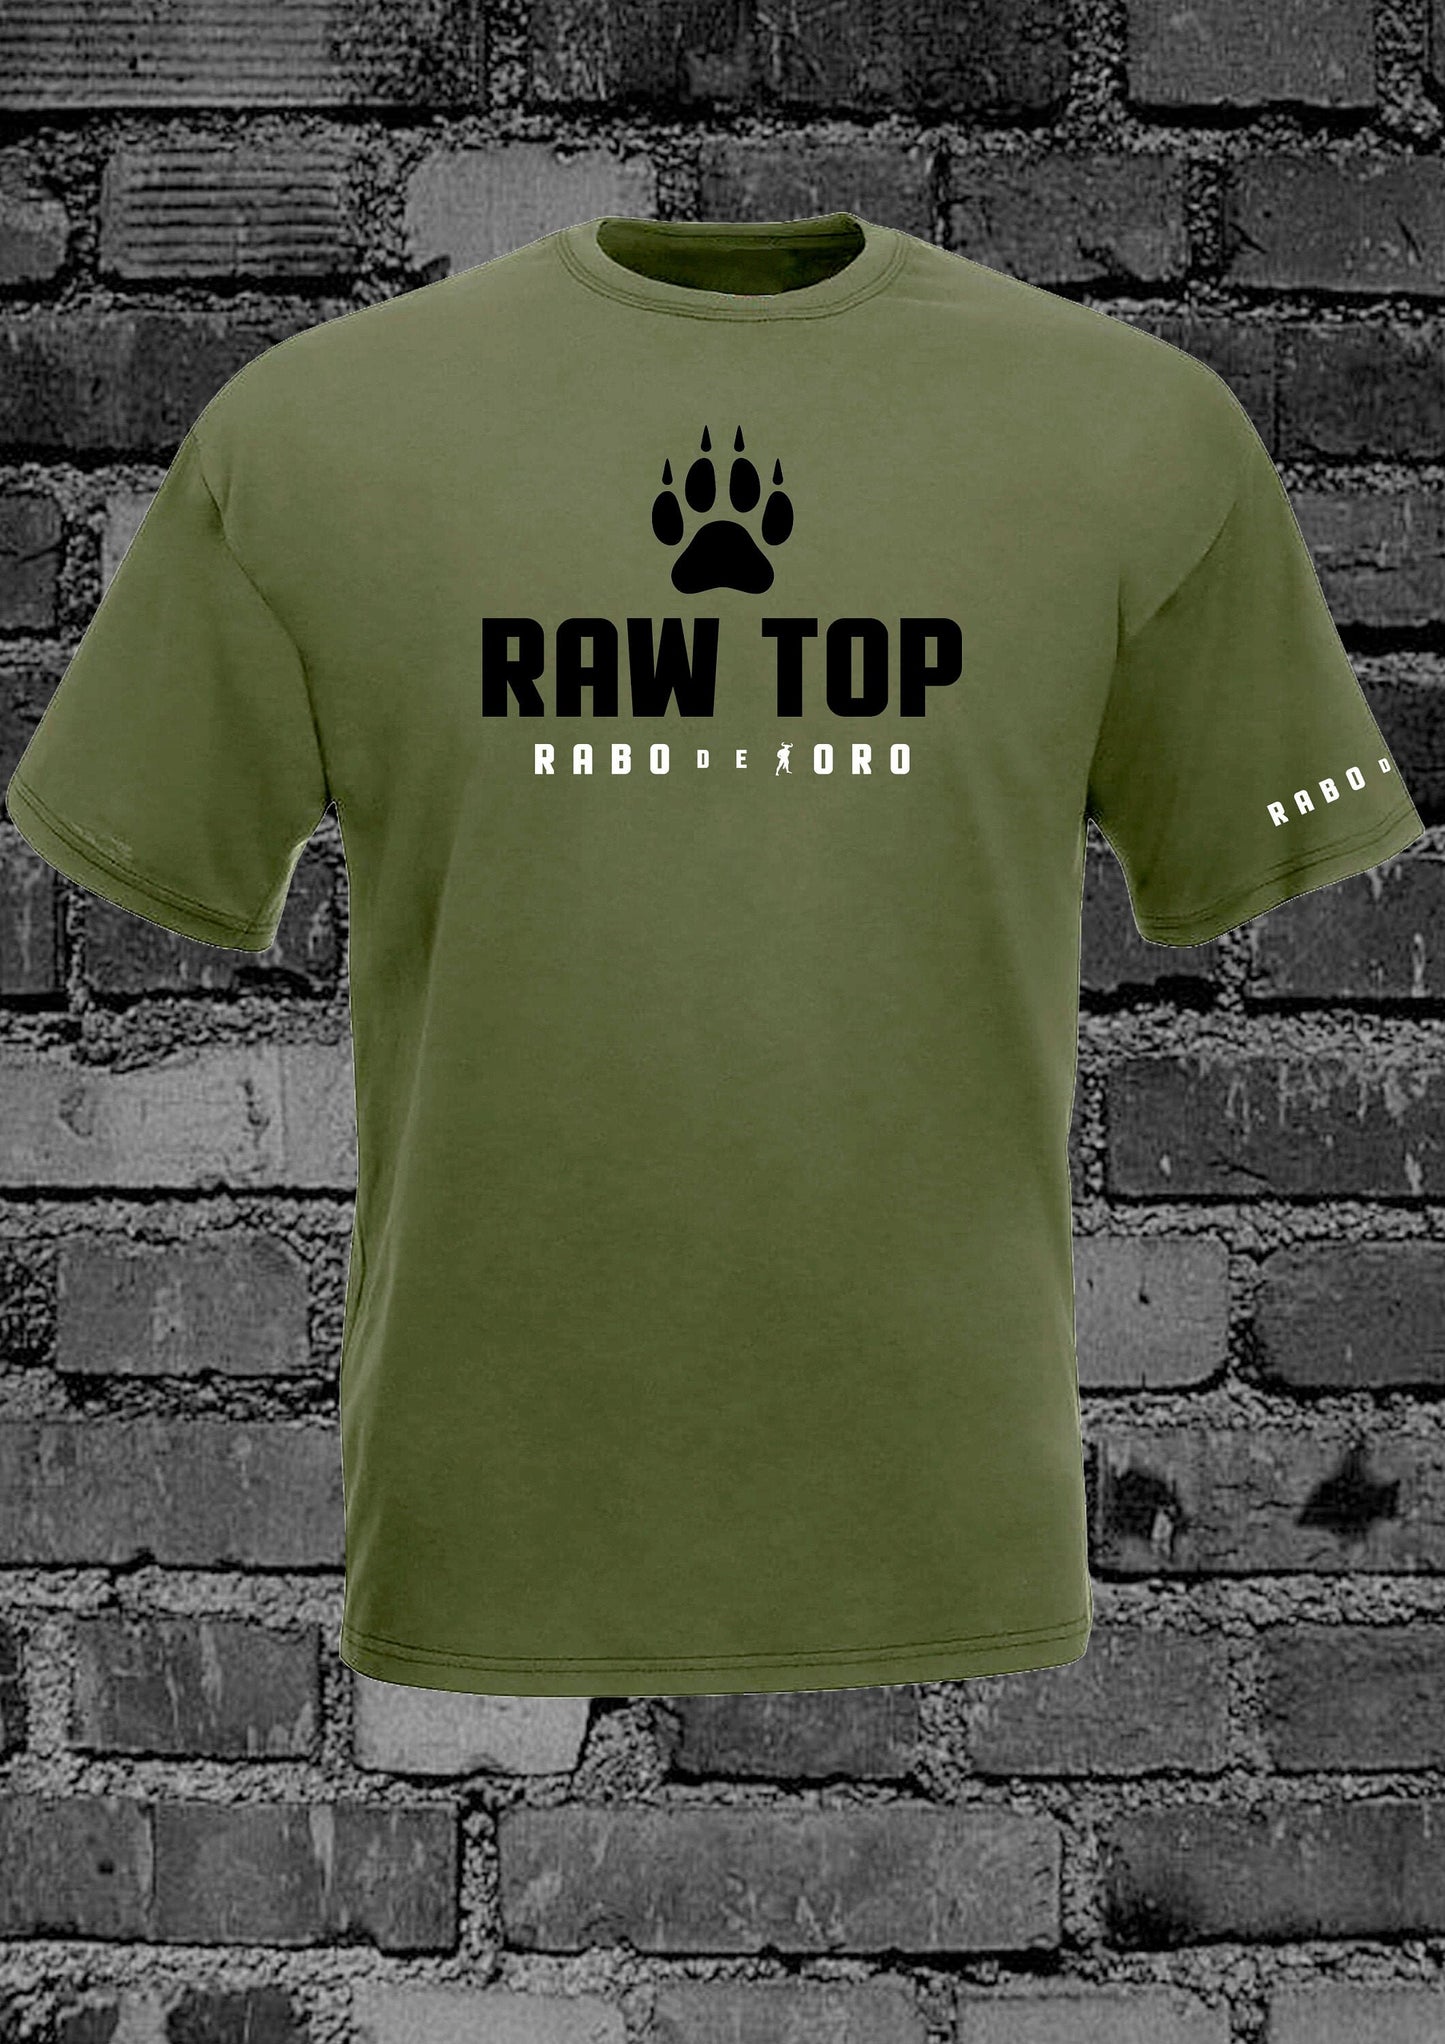 Camiseta RAW TOP verde oliva con detalle de zarpa de lobo